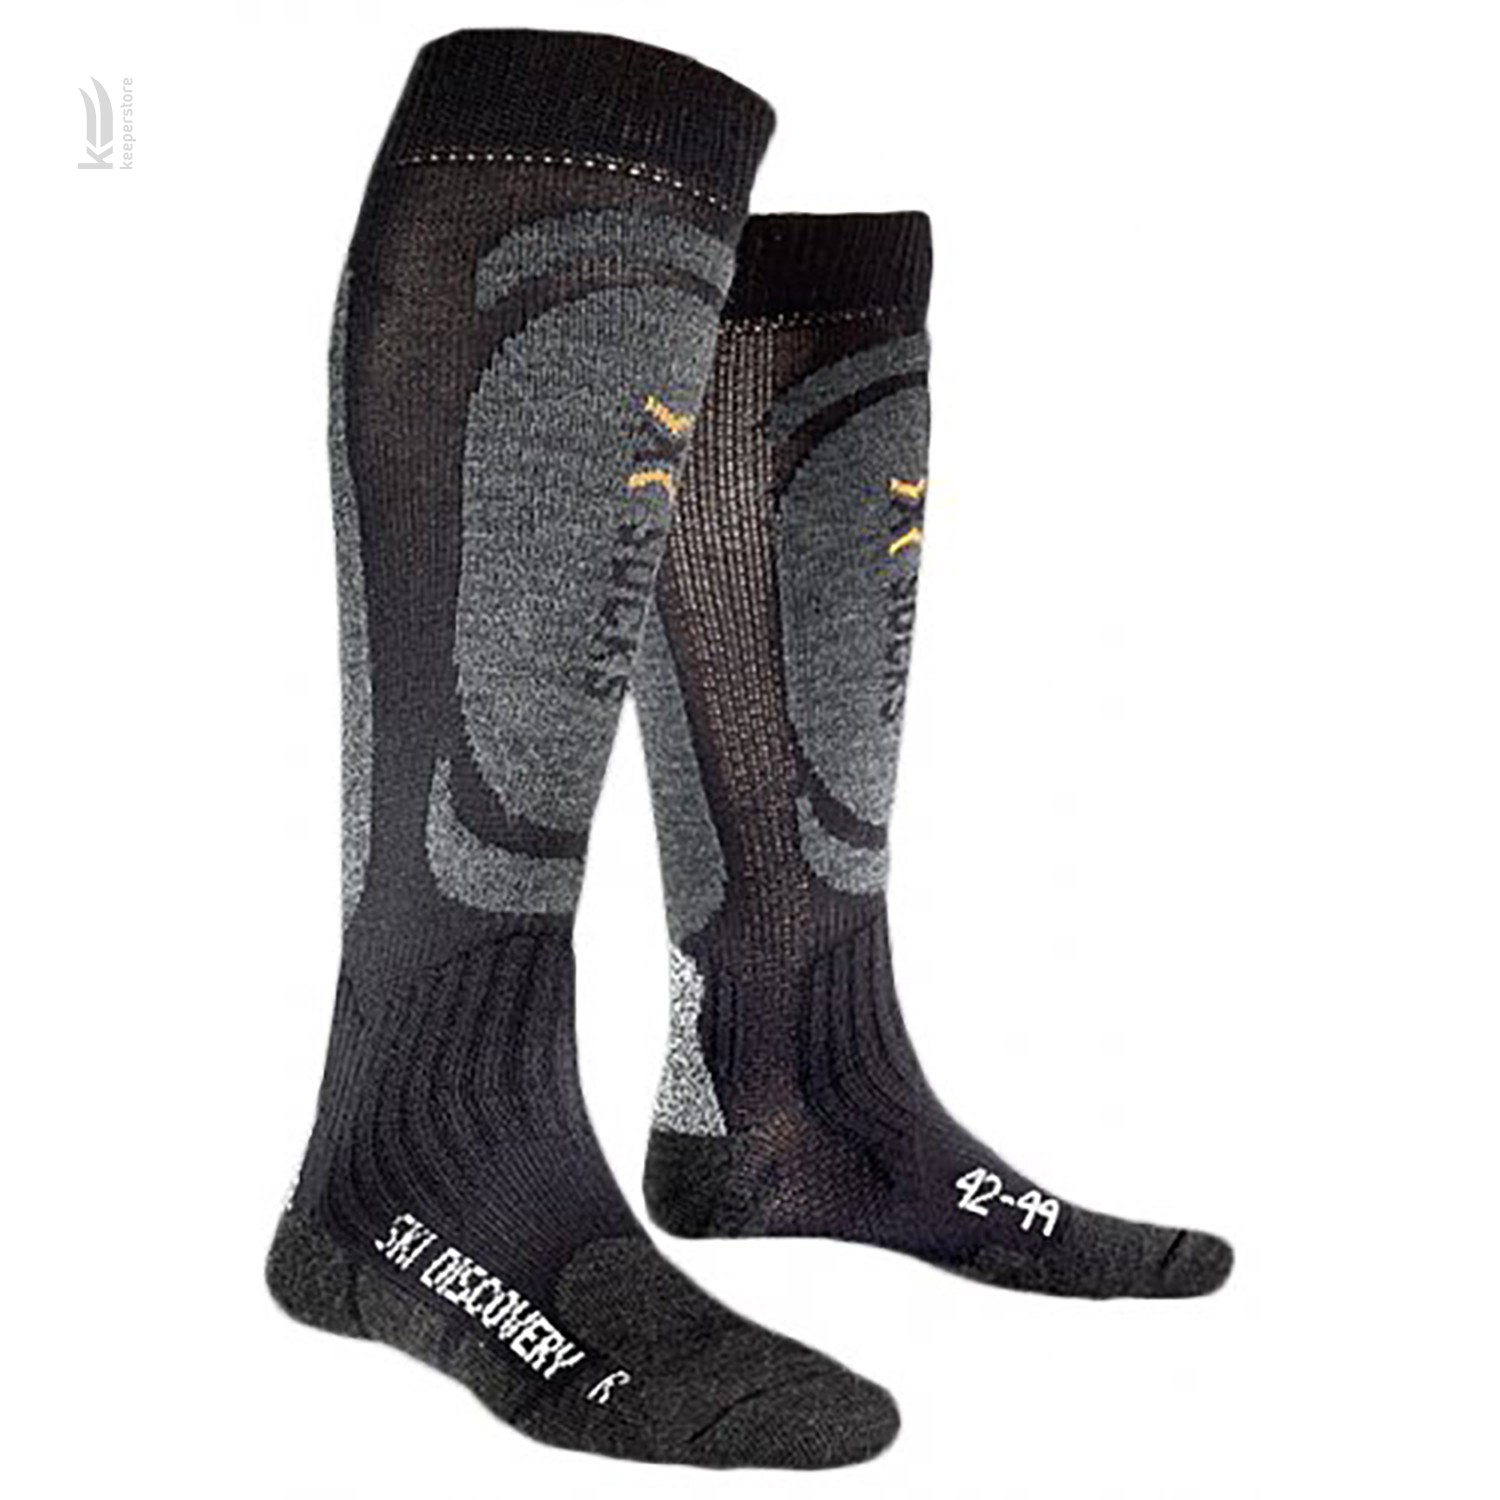 Полиэстеровые носки X-Socks Ski Discovery Black / Anthracite (45-47)